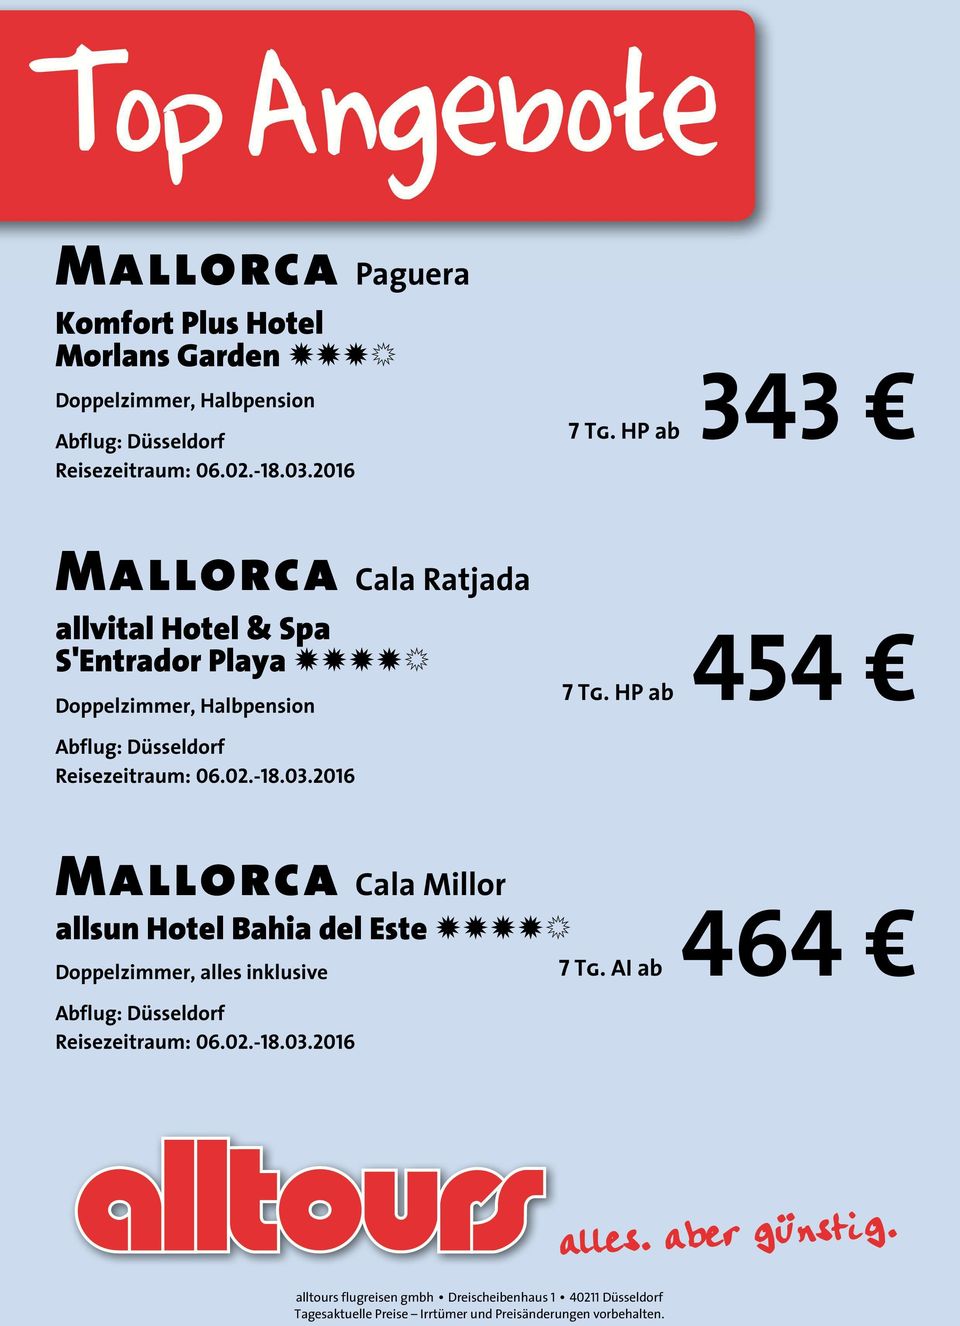 HP ab 343 Mallorca Cala Ratjada allvital Hotel & Spa S'Entrador Playa NNNNn Doppelzimmer,